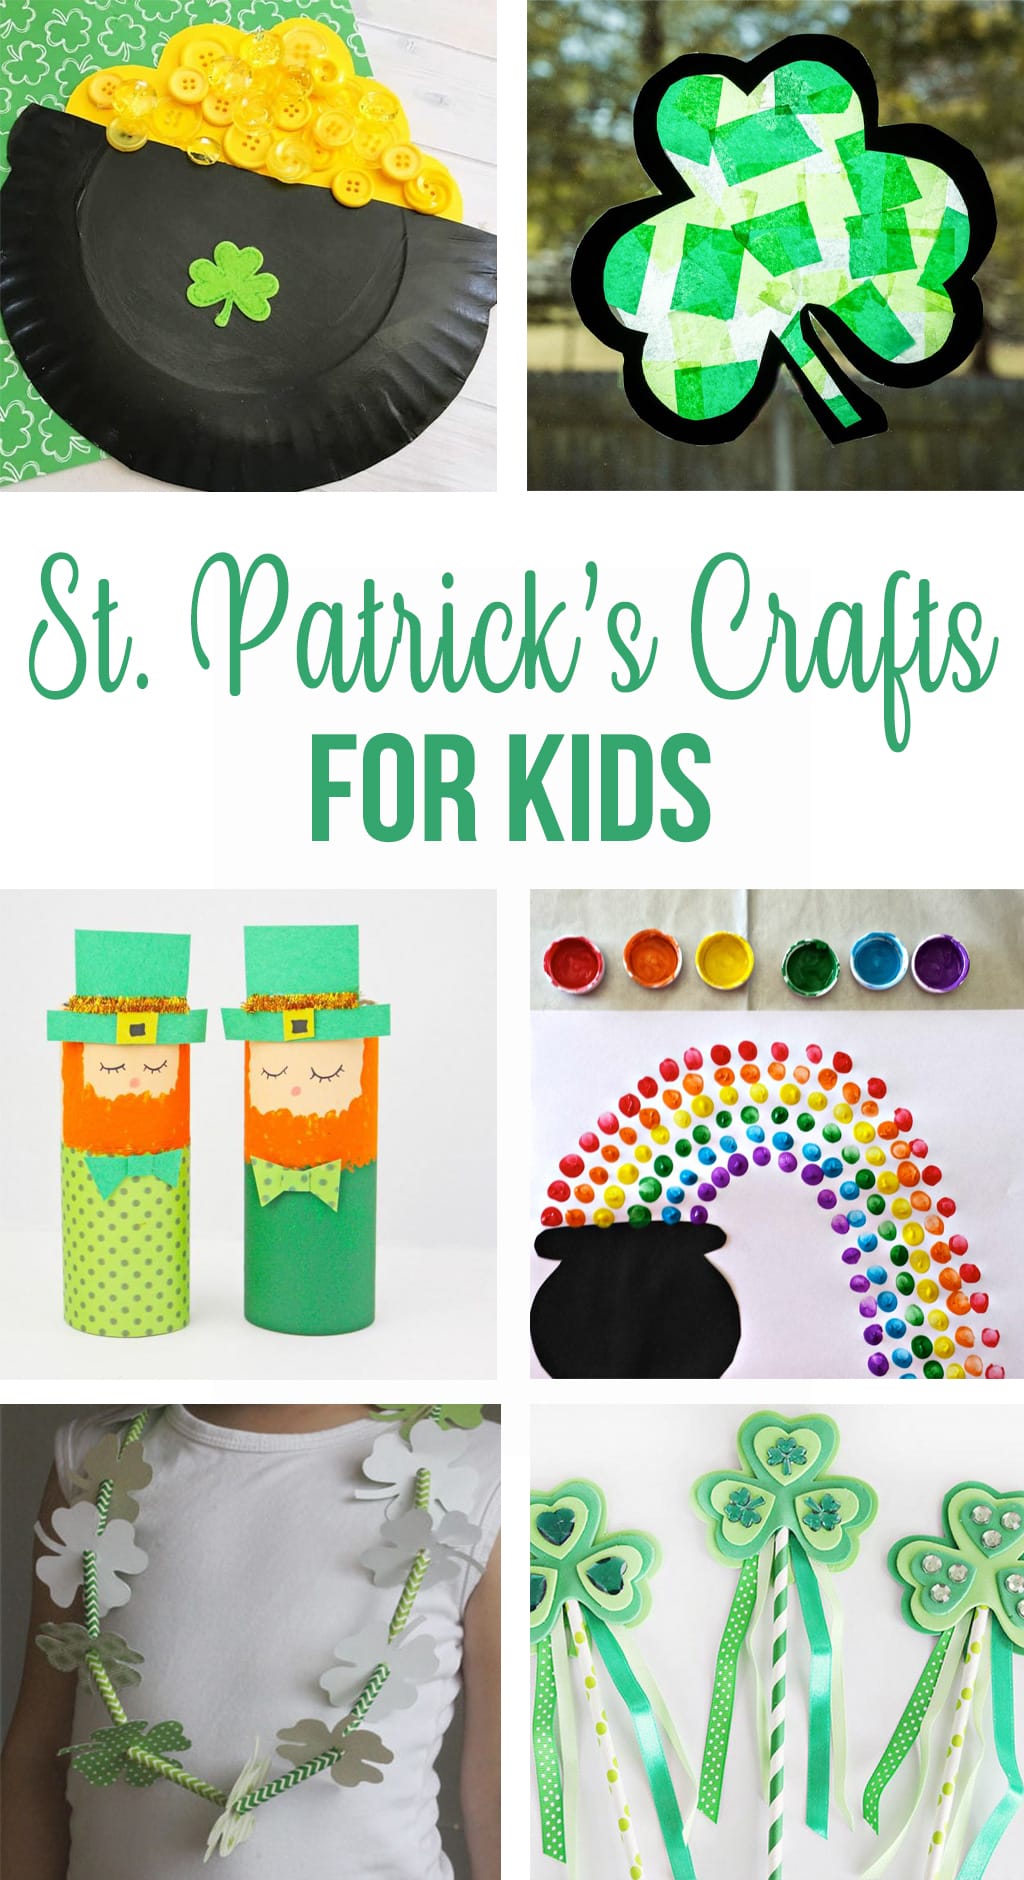 St. Patrick's Crafts for Kids